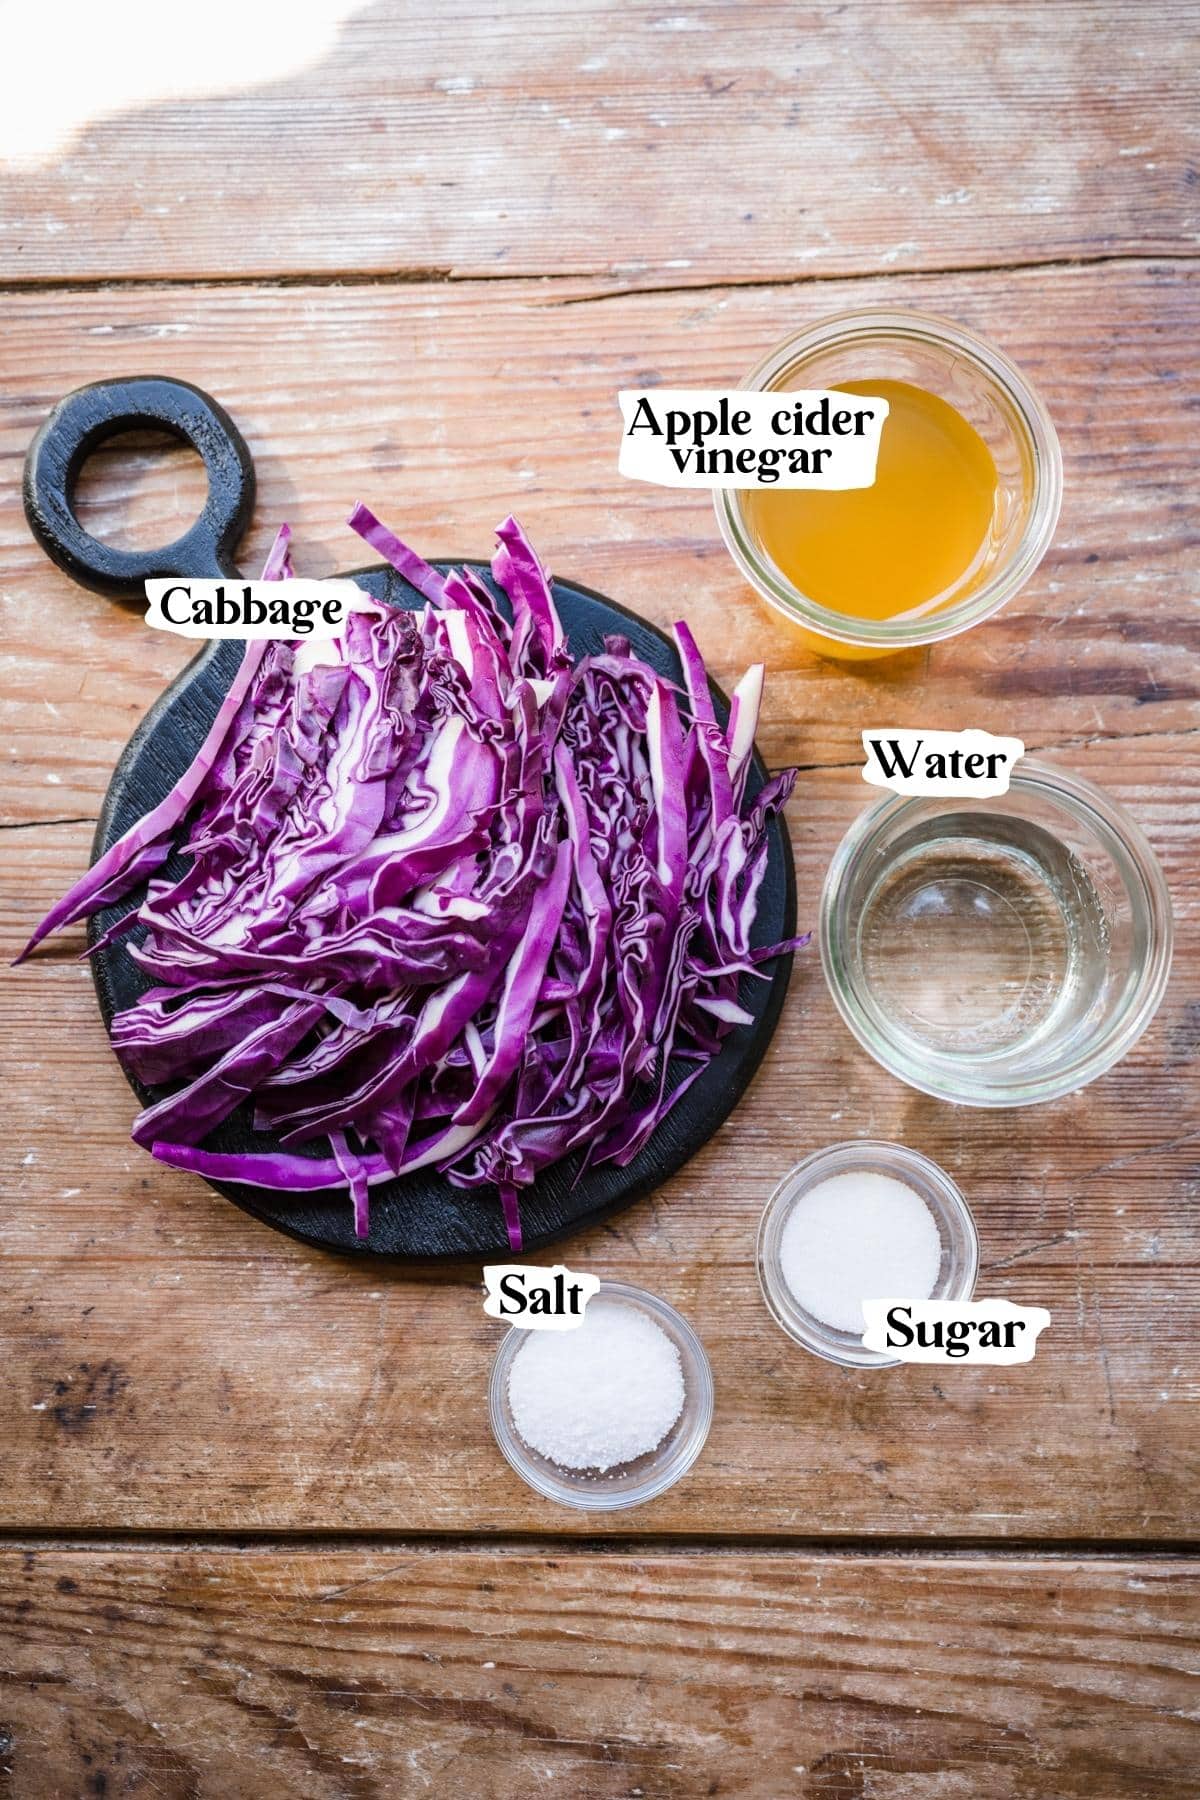 Pickled cabbage ingredients, including cabbage and apple cider vinegar.